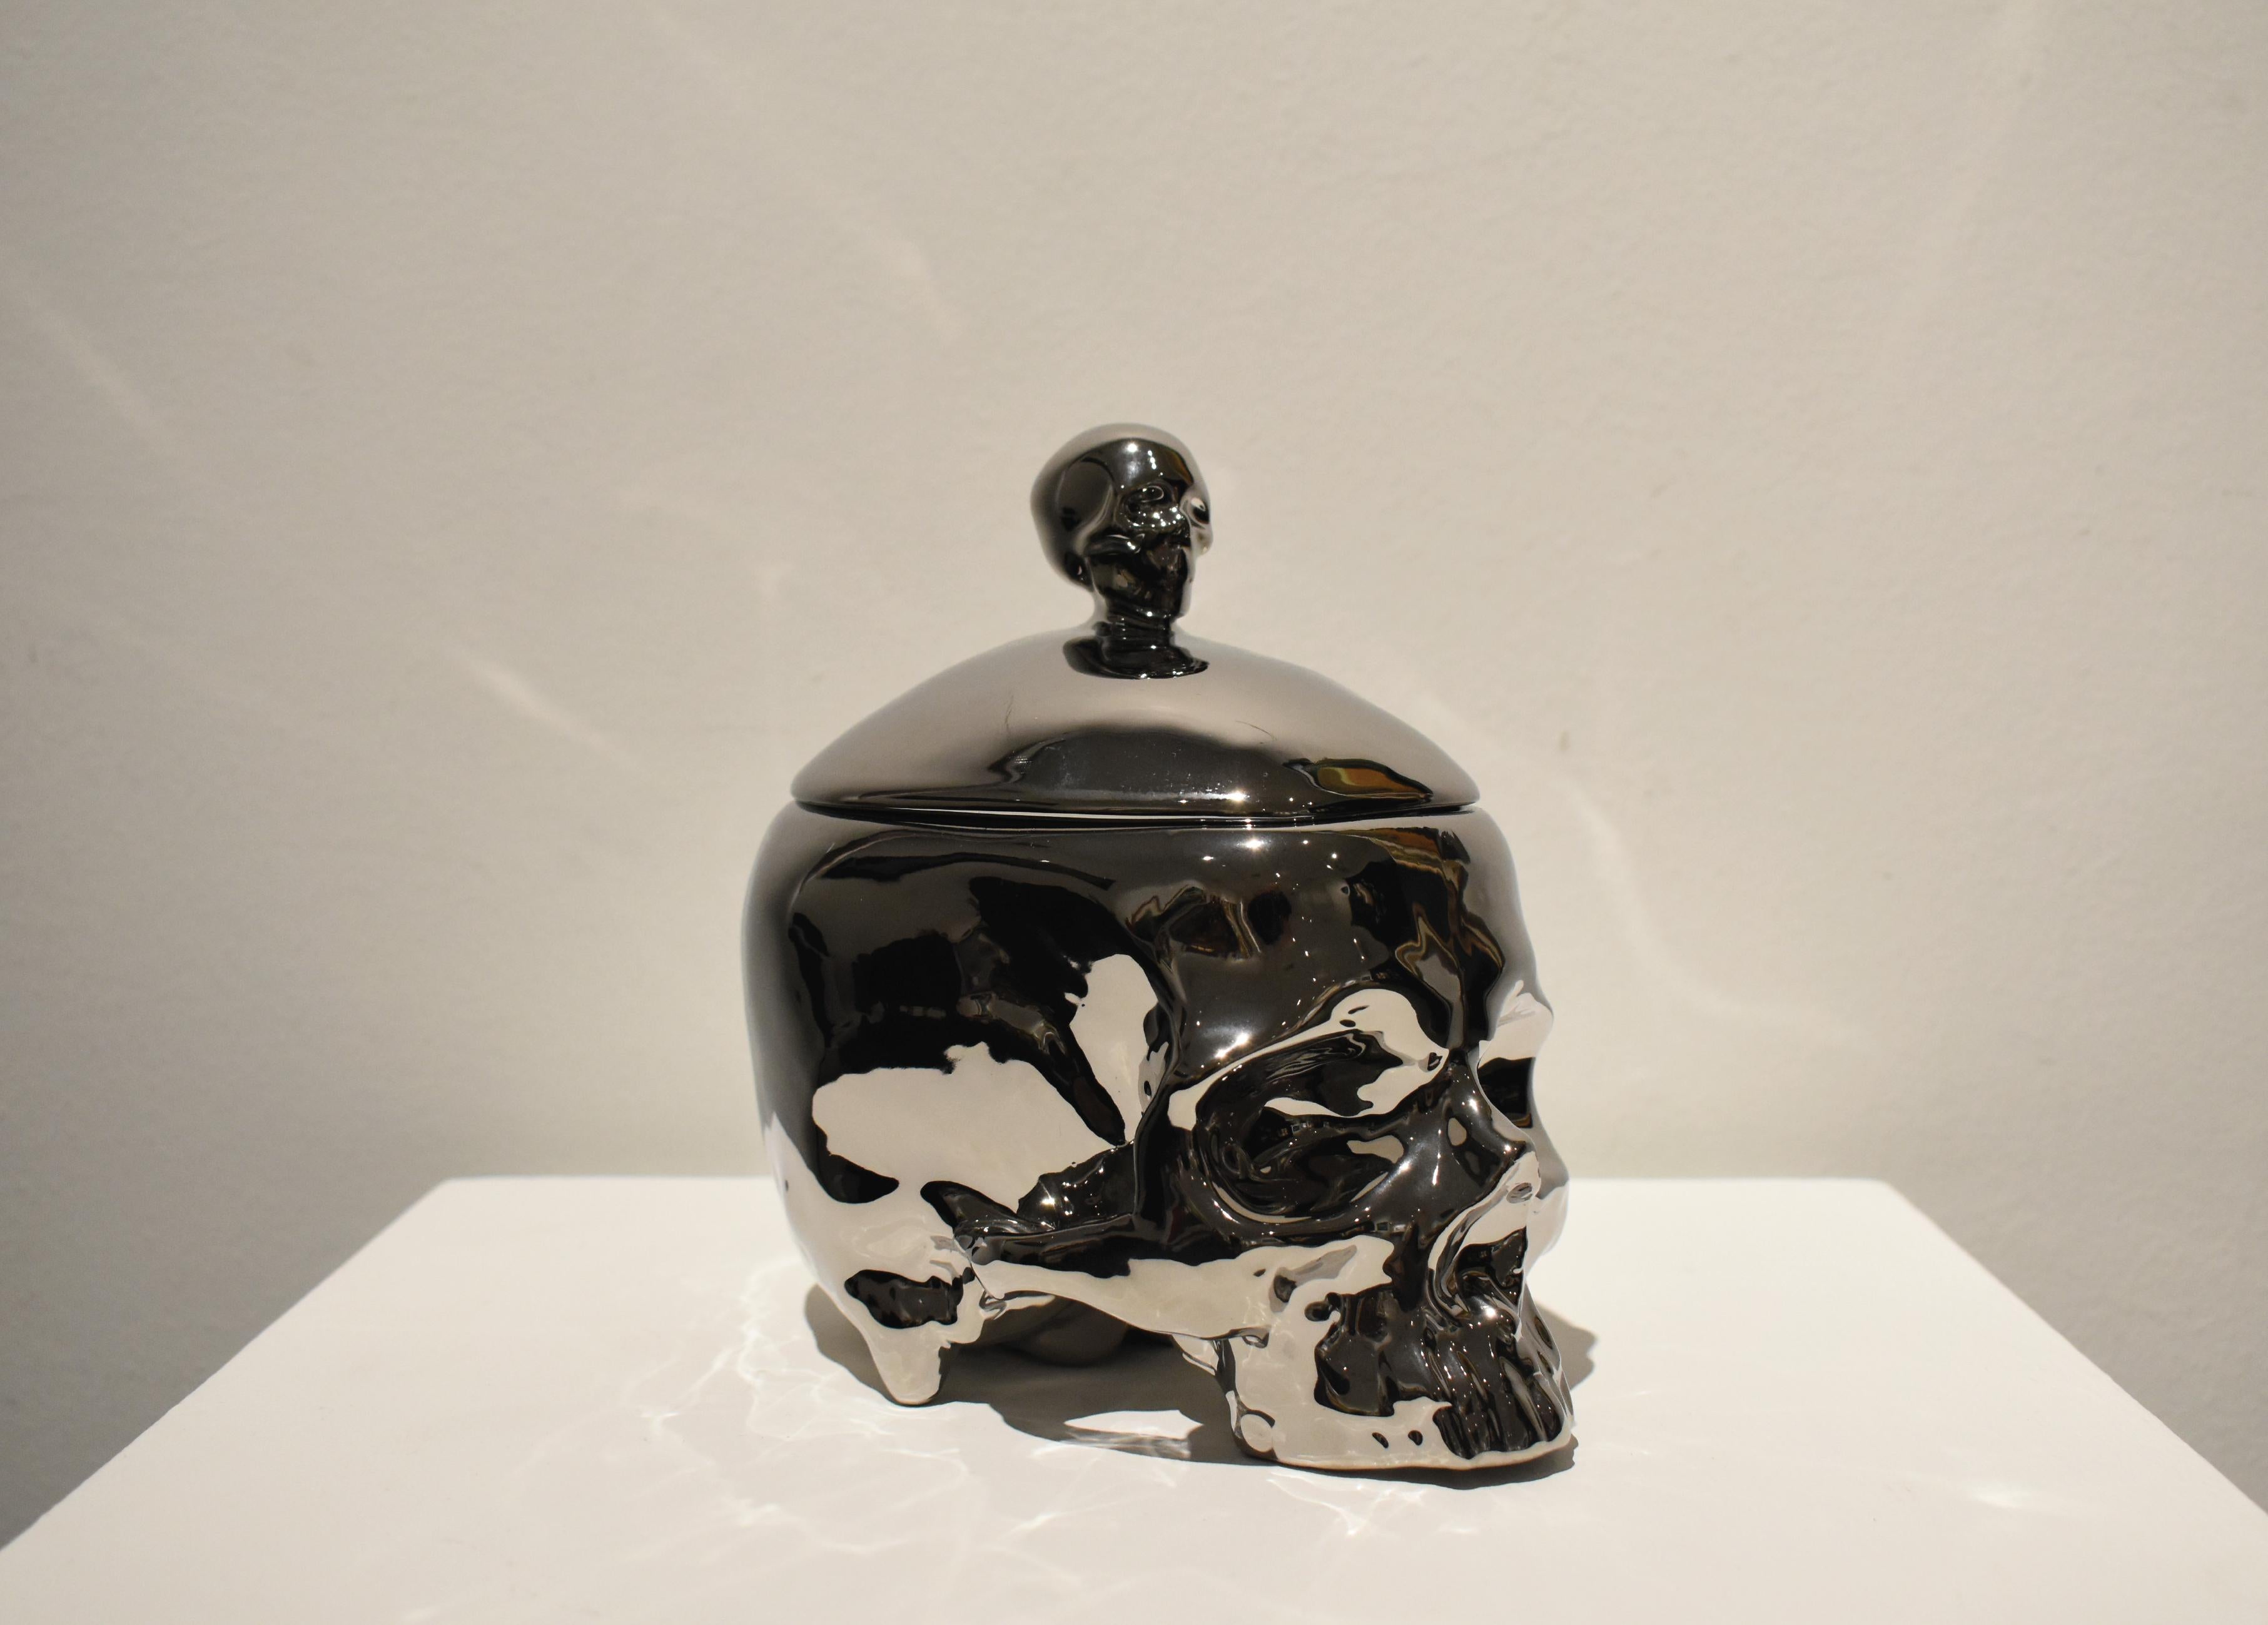 Porzellanskulptur mit Totenkopfform in Silberfarbe, abnehmbarer Deckel (Pop-Art), Sculpture, von Huang Yulong